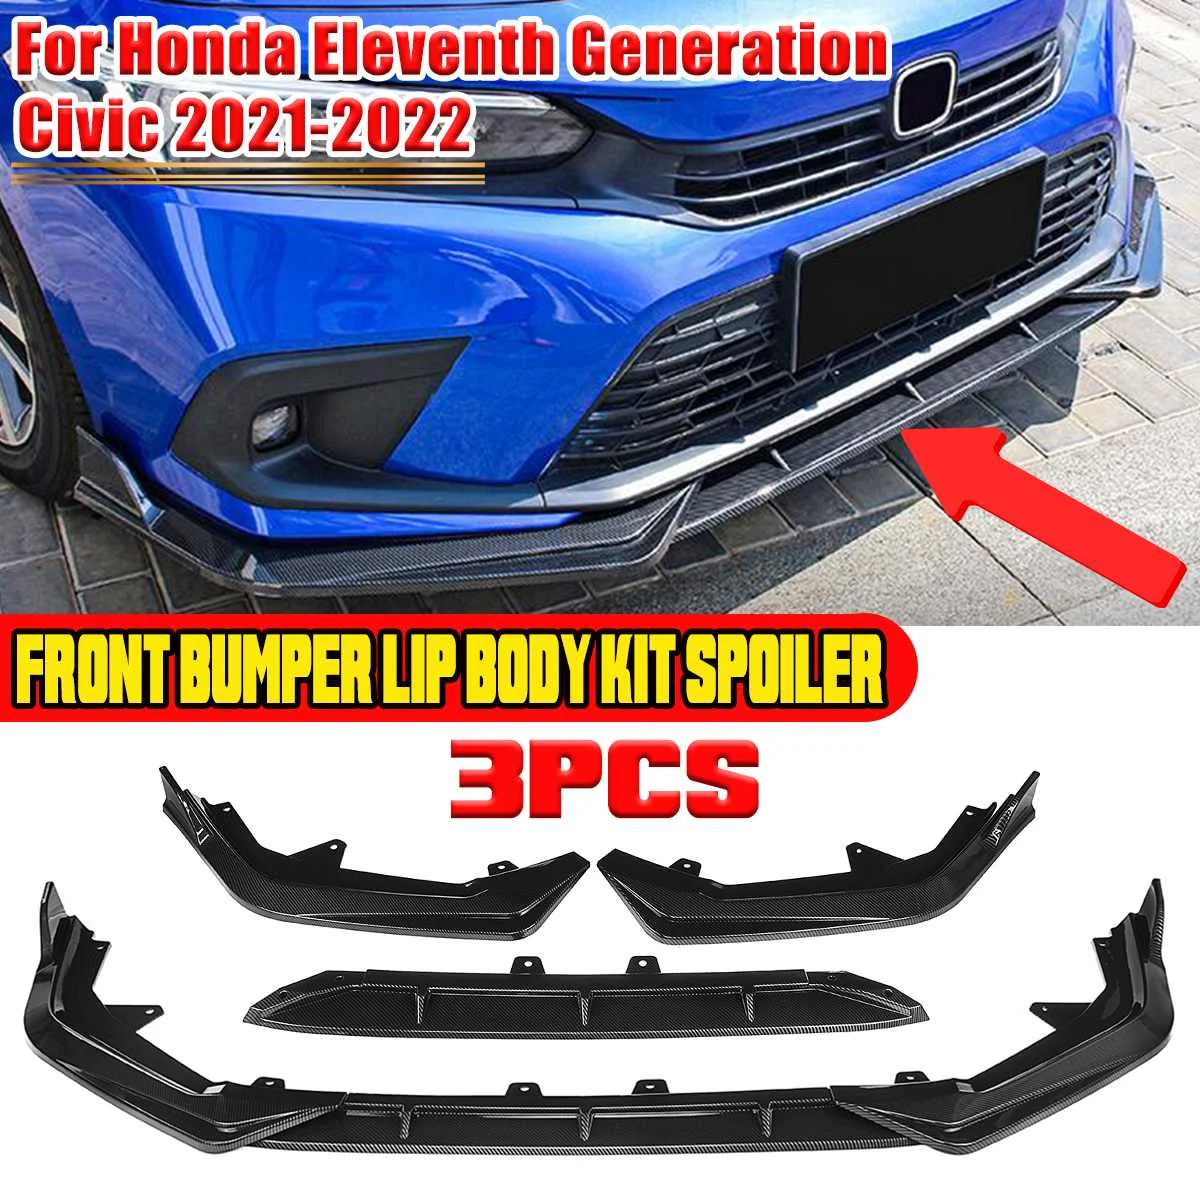 

3xCar Front Bumper Lip Body Kit Spoiler Deflector Lips Splitter Lip Guard For Honda For Civic 11th Eleventh Generation 2021-2022